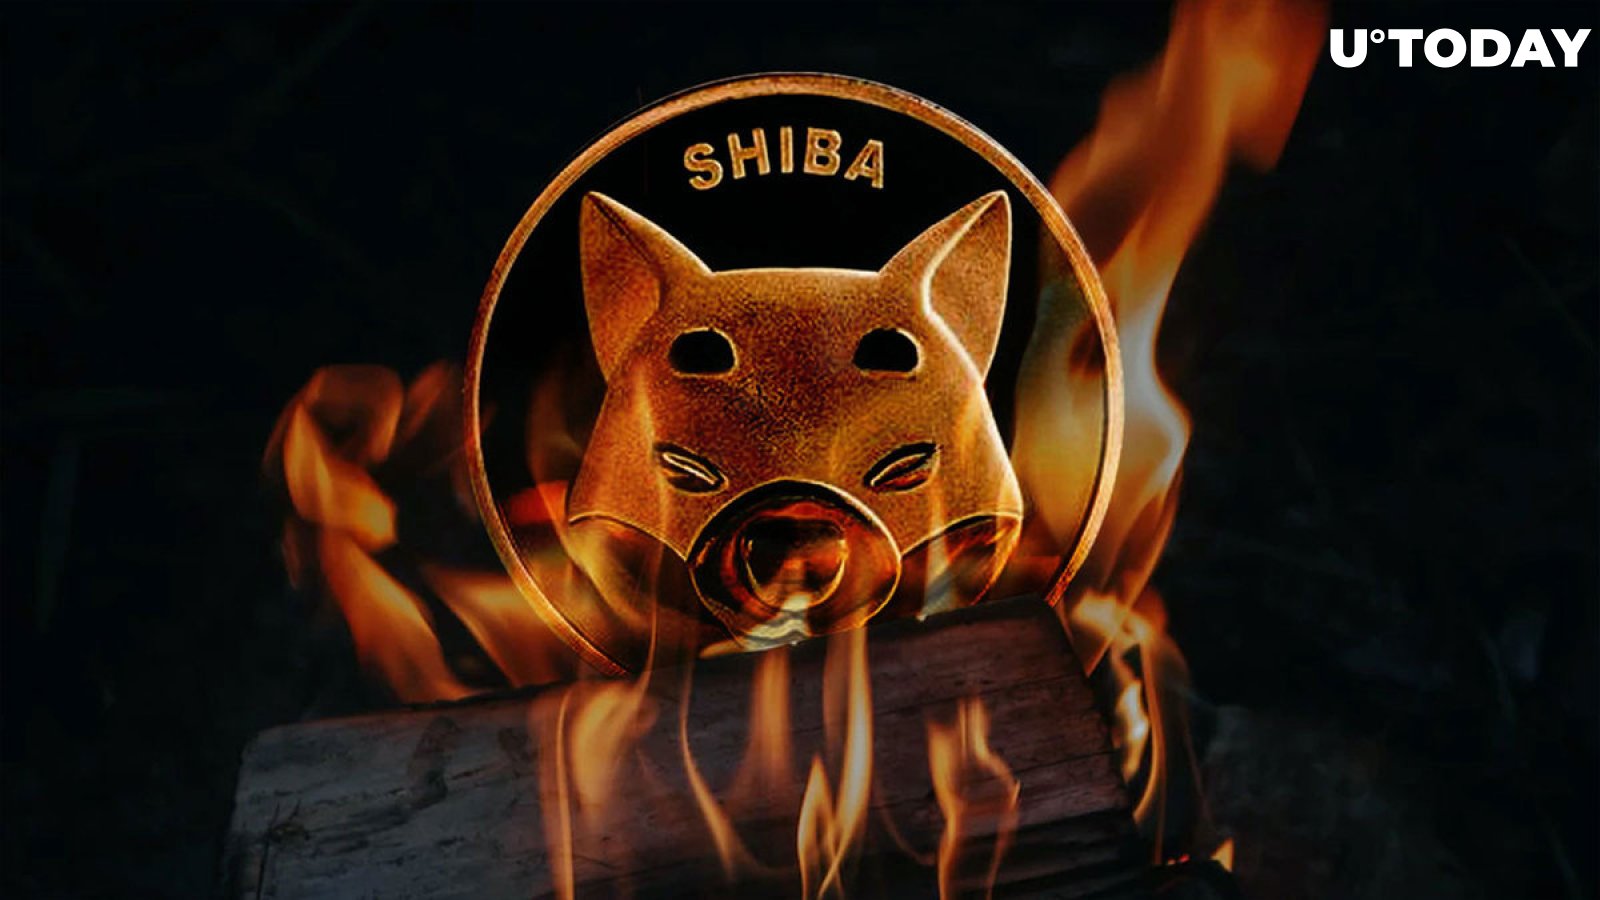 Shiba Inu Burn Rate Plummets With Only 22 Million SHIB Burned in Week